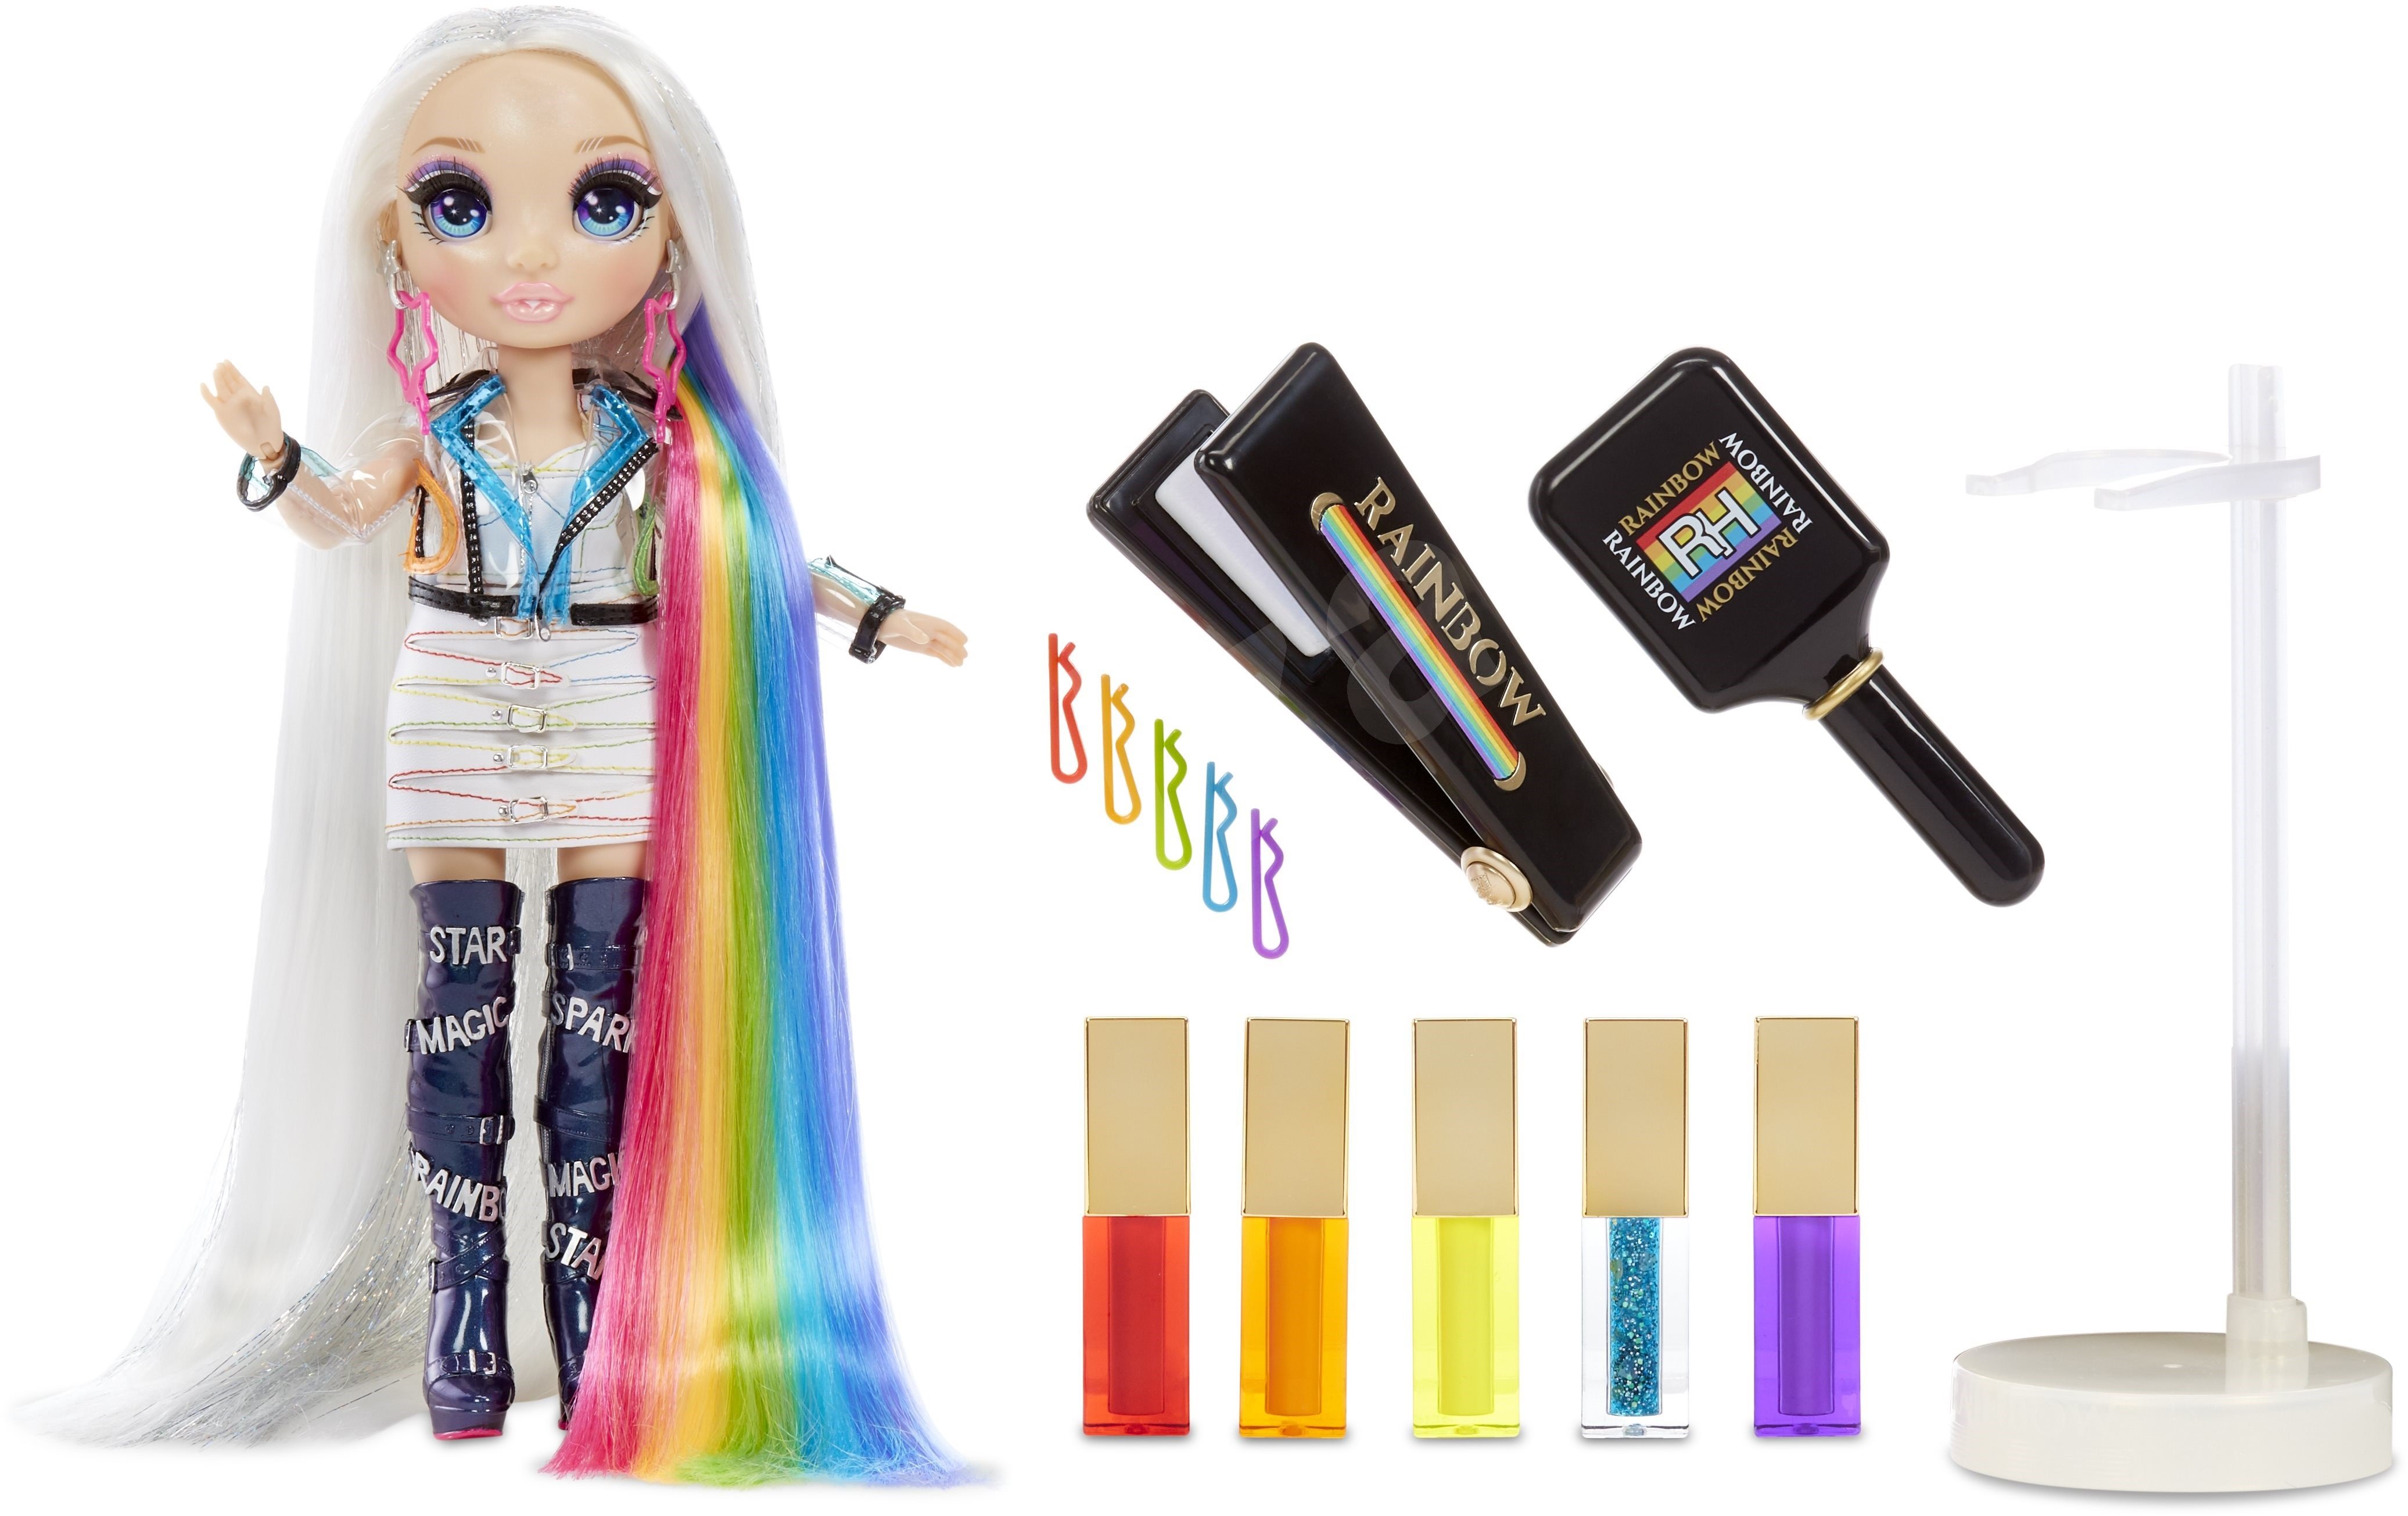 Rainbow High Hair Studio with Doll Spēļu komplekts ar ekskluzīvu lelli